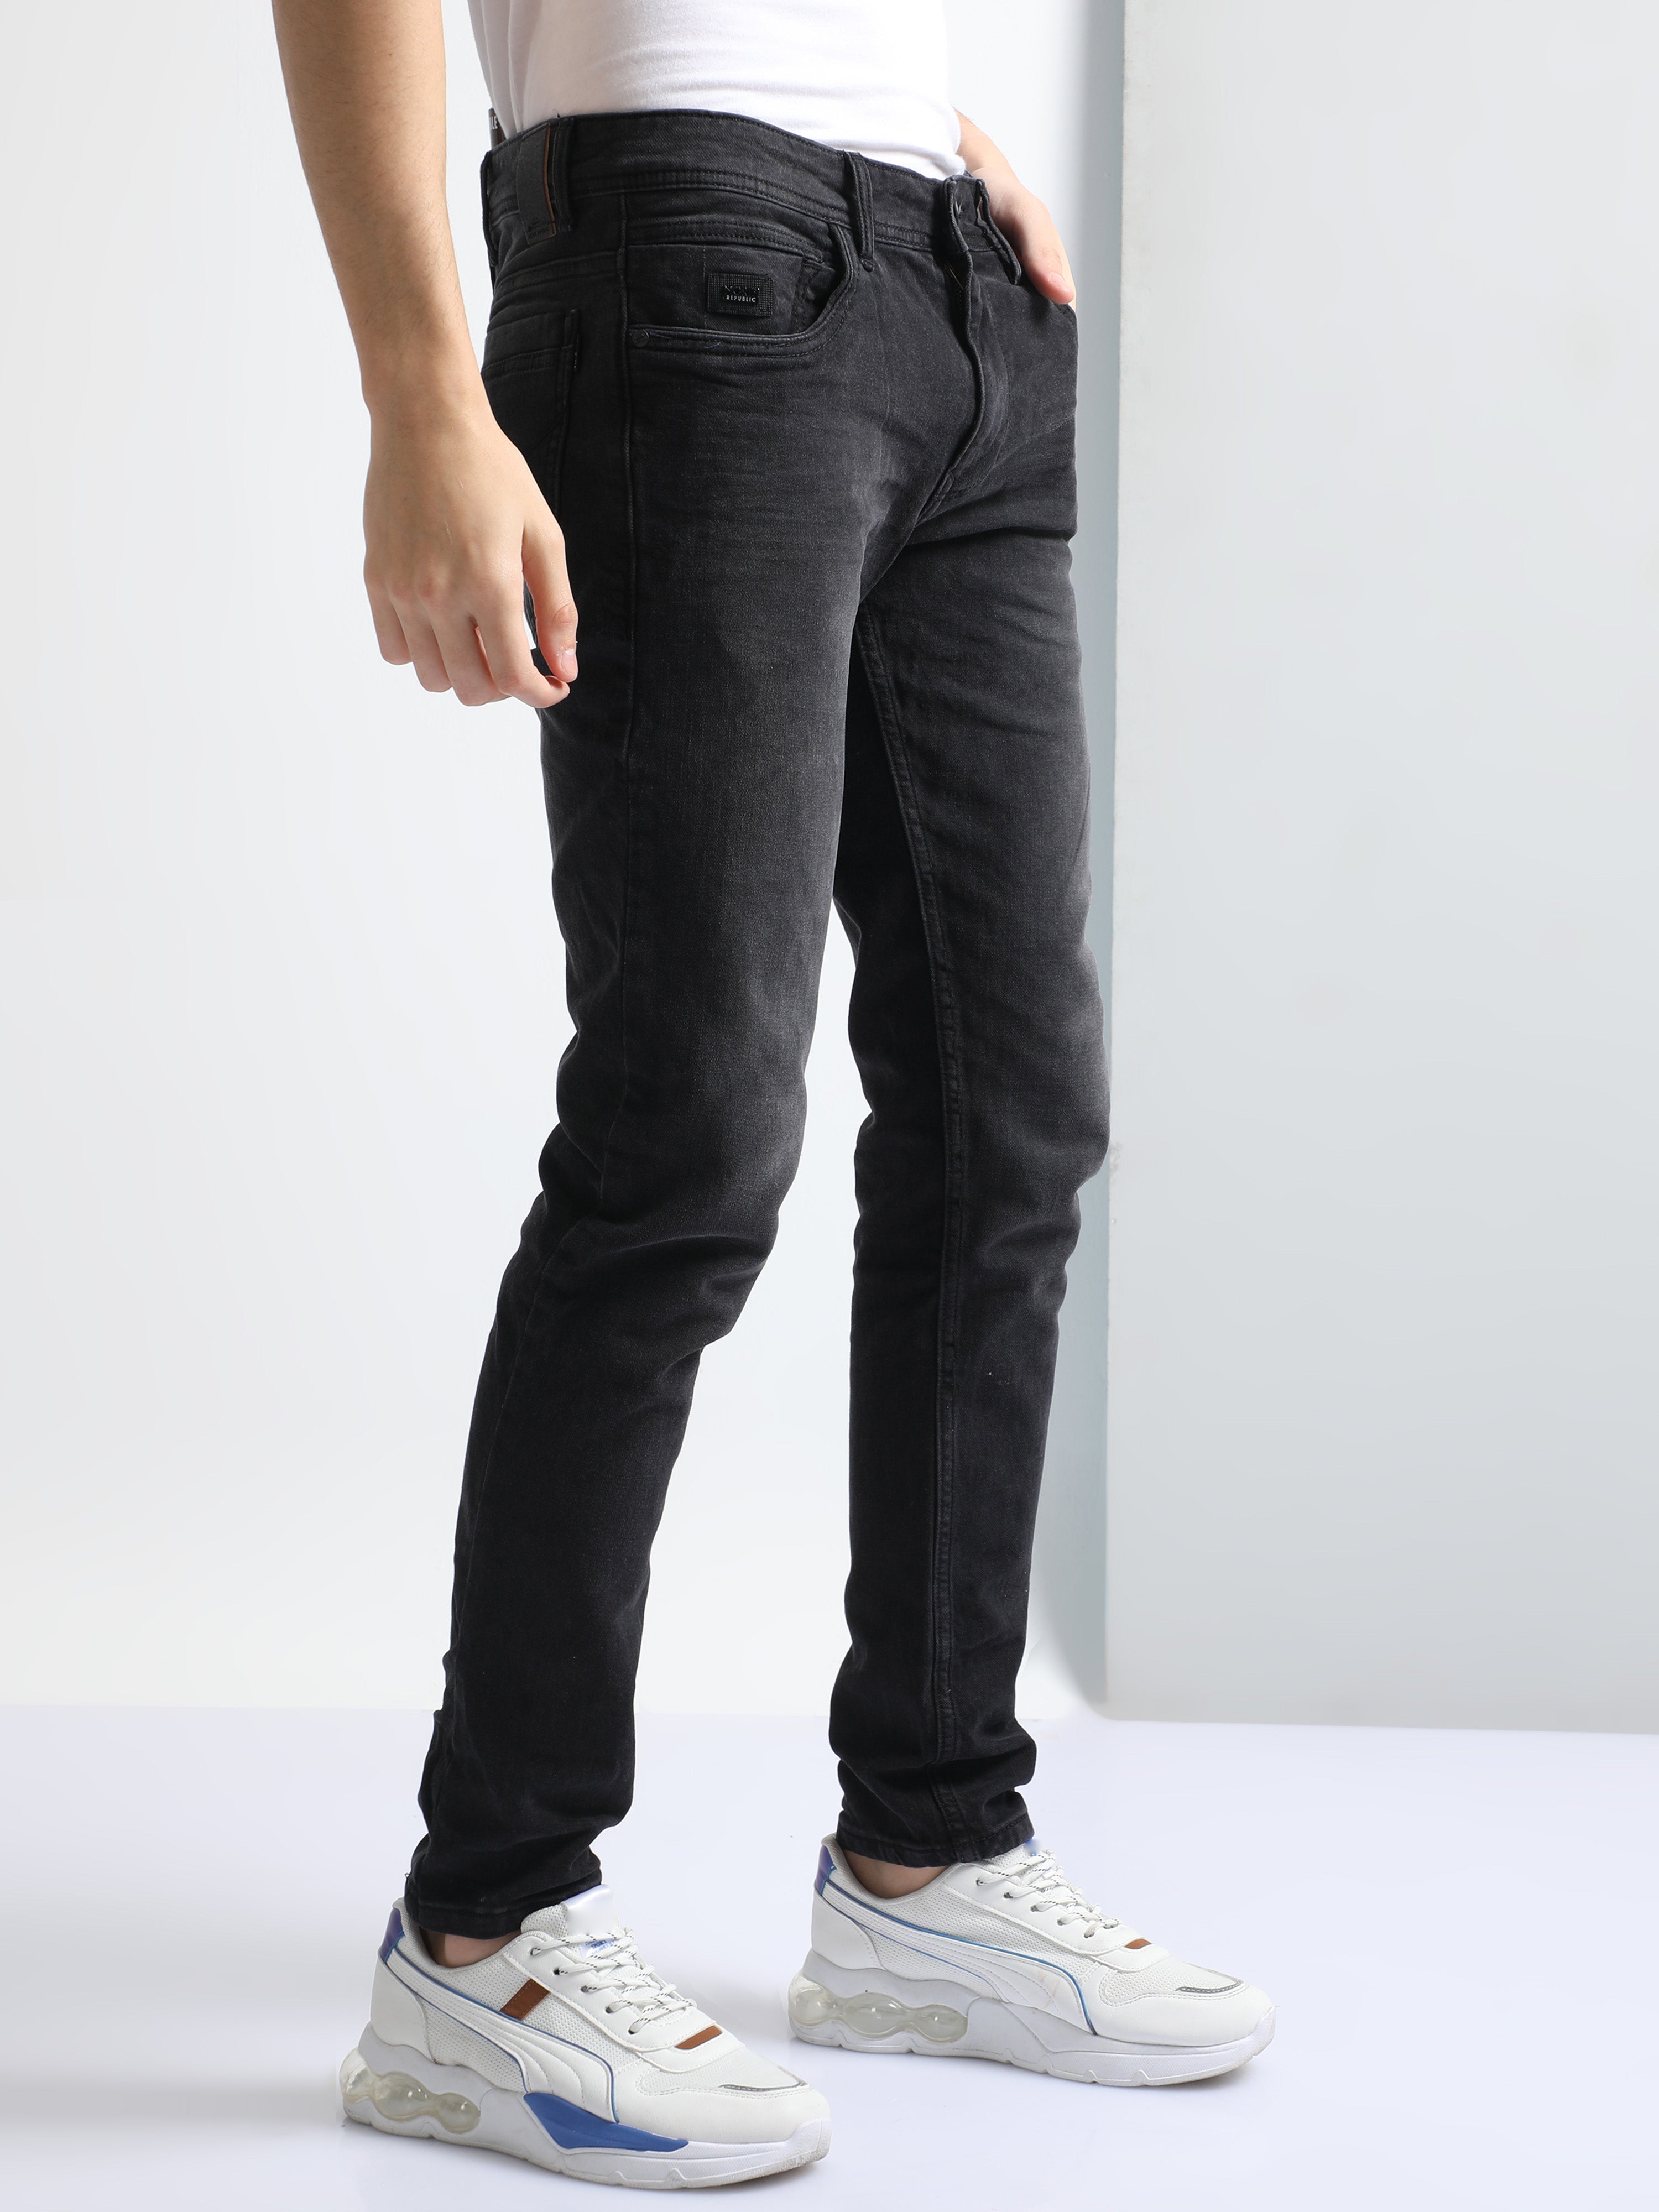 Regular Fit Men Black Faded Denim Jeans at Rs 500/piece in Ahmedabad | ID:  2852091576430